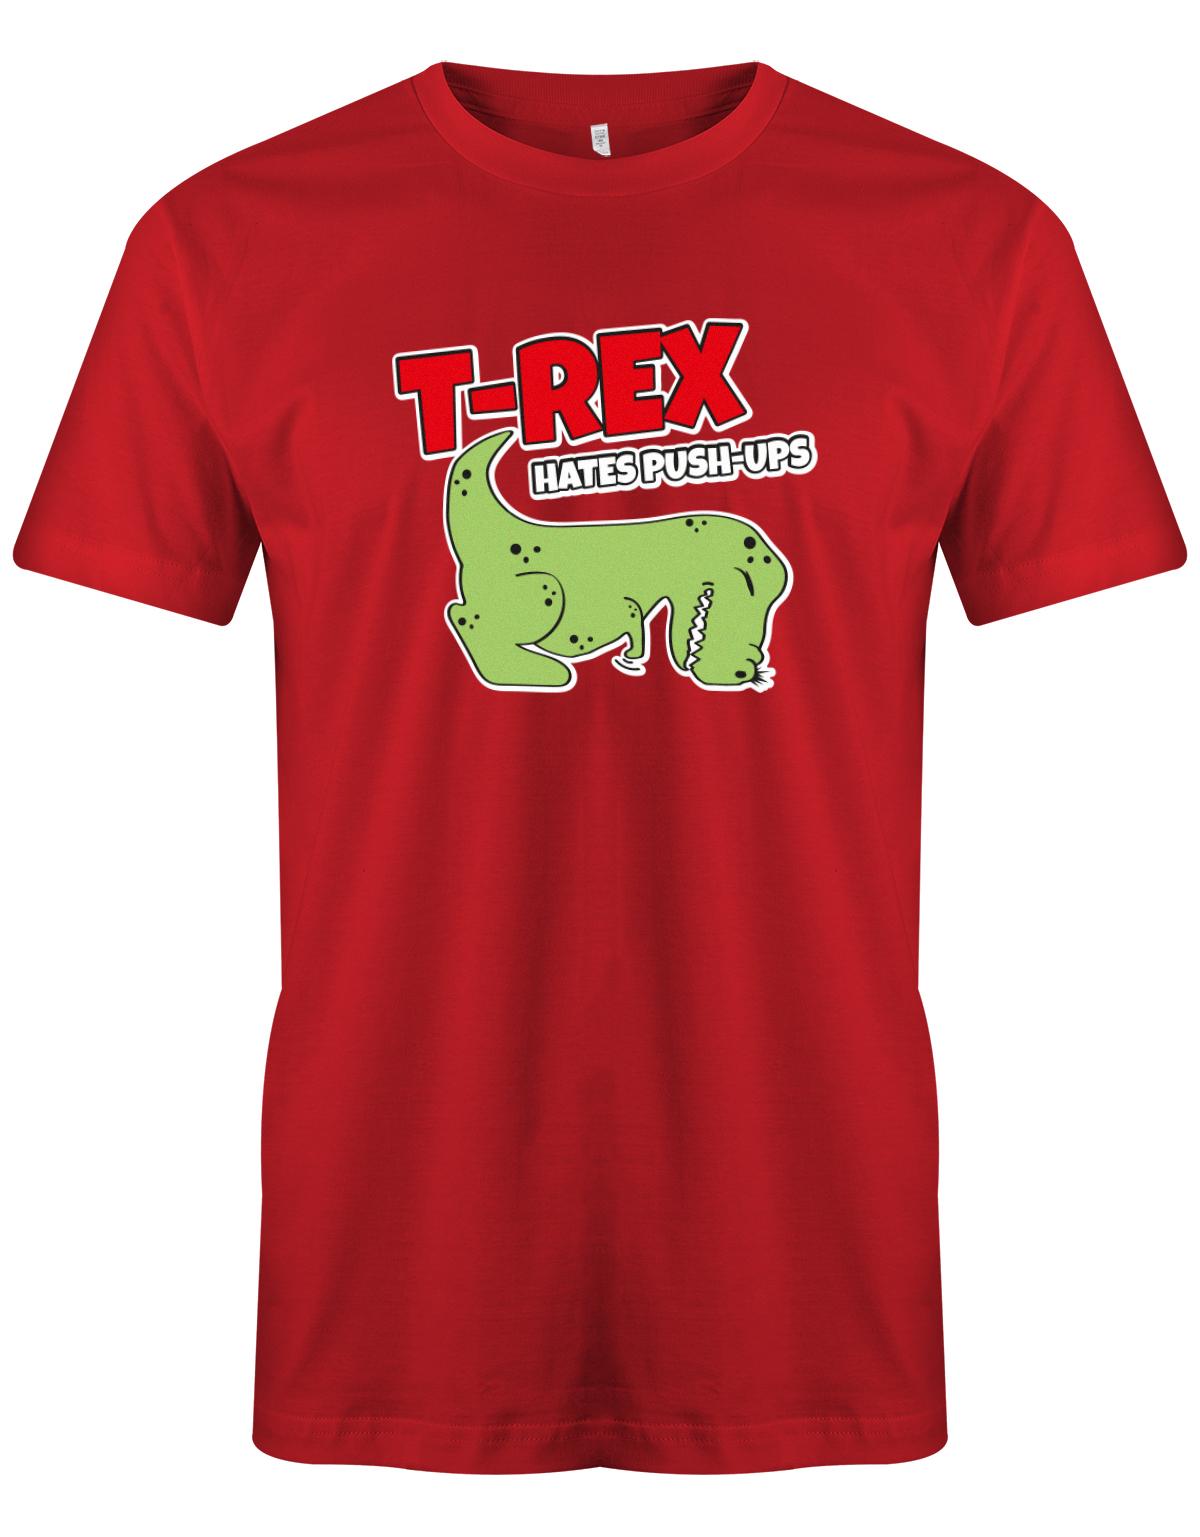 T-Rex-hates-push-ups-herren-SHirt-Rot